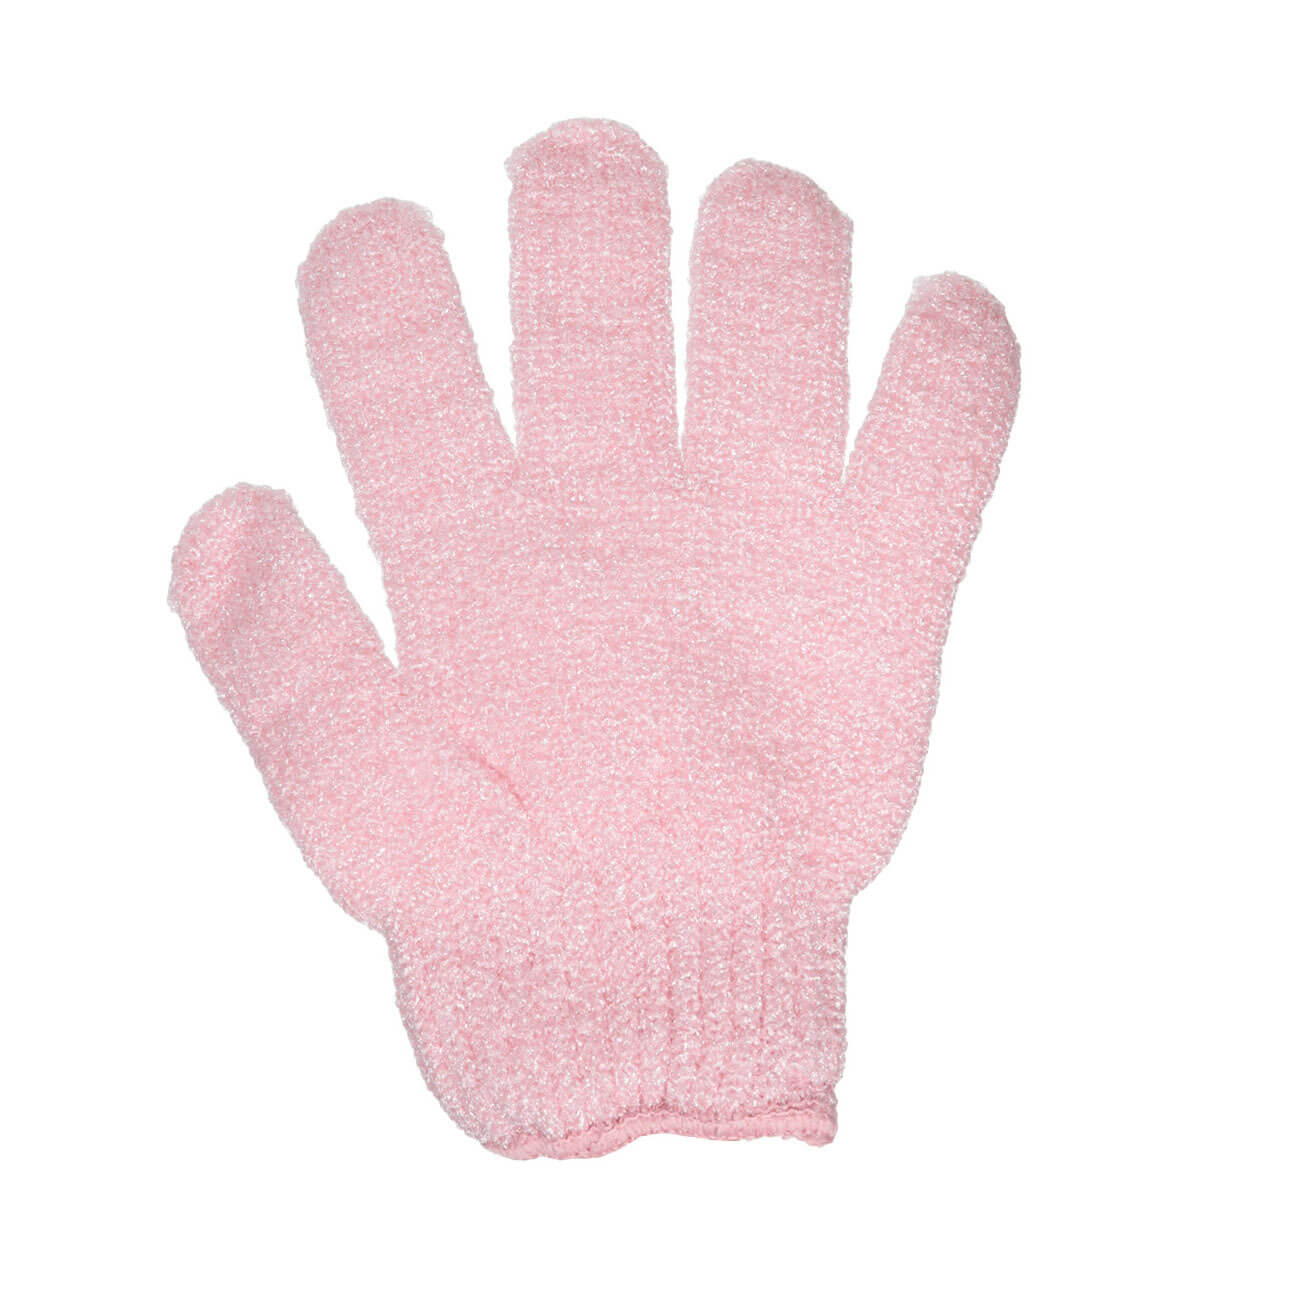 Перчатка для мытья тела, 19 см, 2 шт, нейлон, пудровая, Gentle spa перчатка для барбекю термостойкая